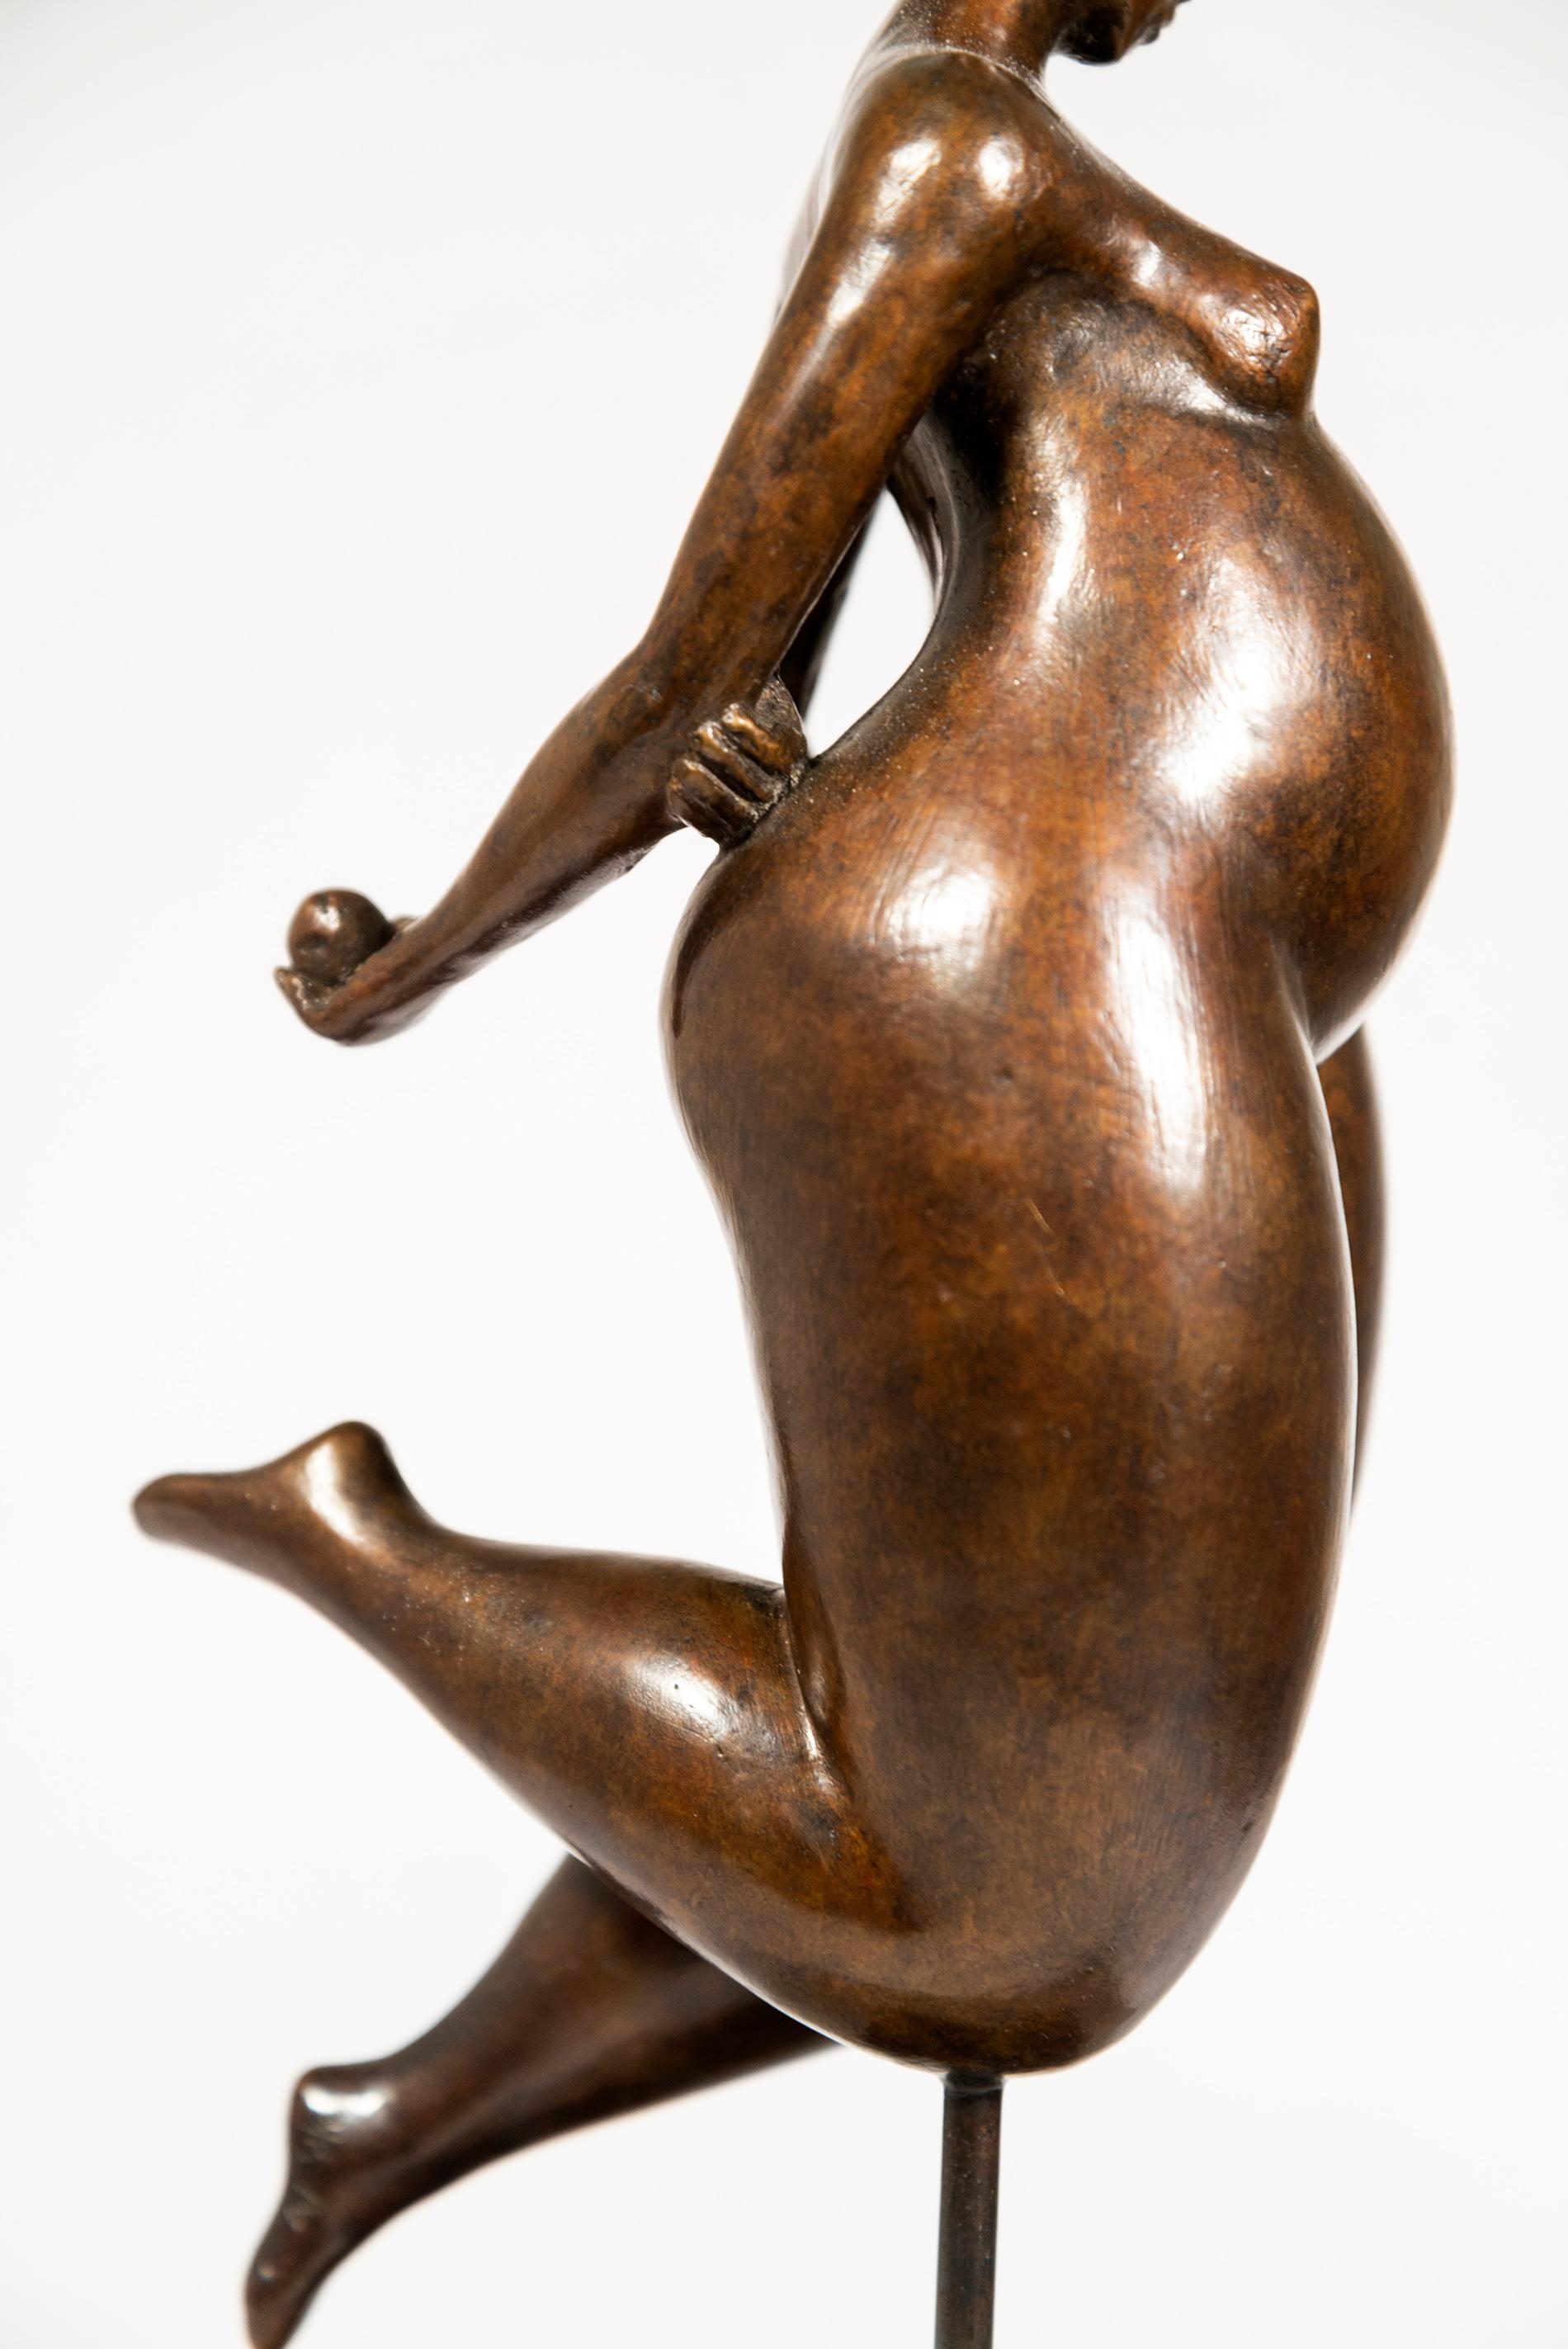 Zaliatou 3/8 - female, figurative, nude, expressive, modern, bronze sculpture For Sale 4